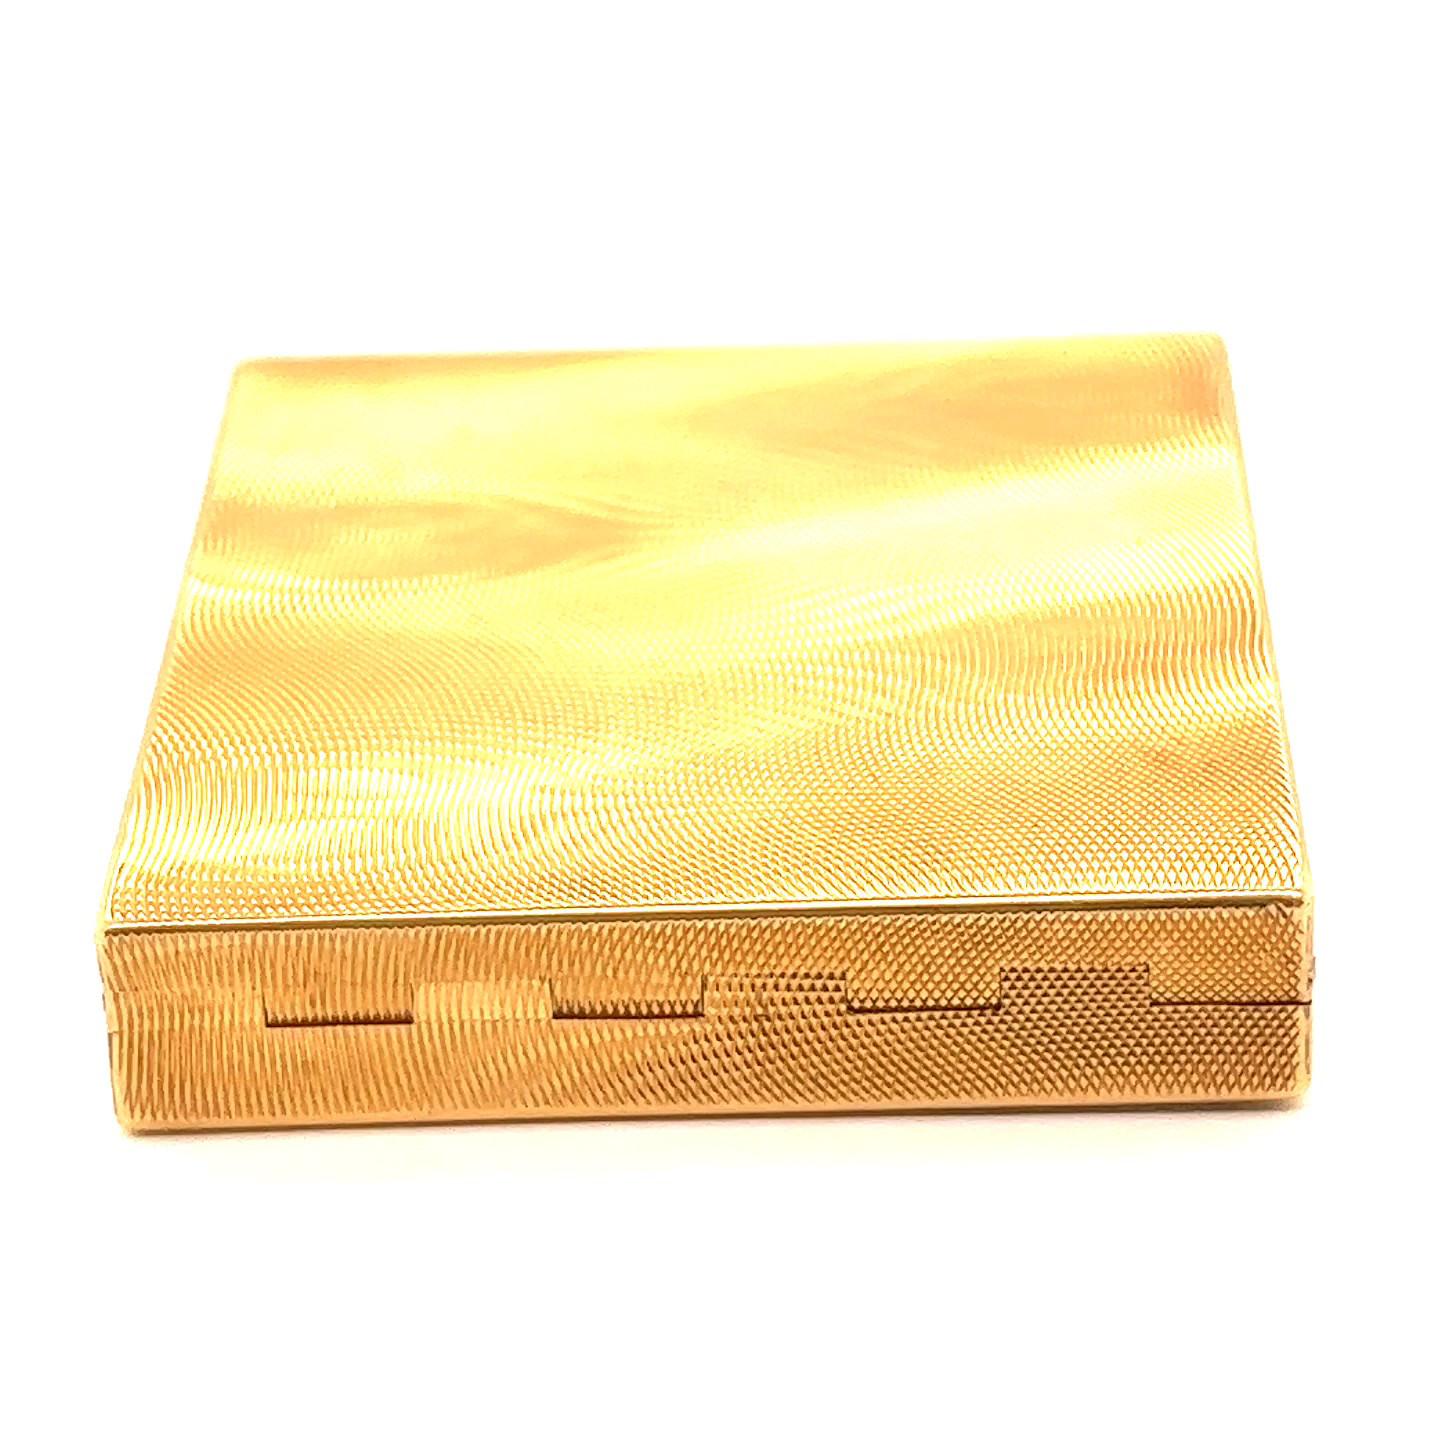 Retro Bvlgari Diamond 18 Karat Gold Compact 1